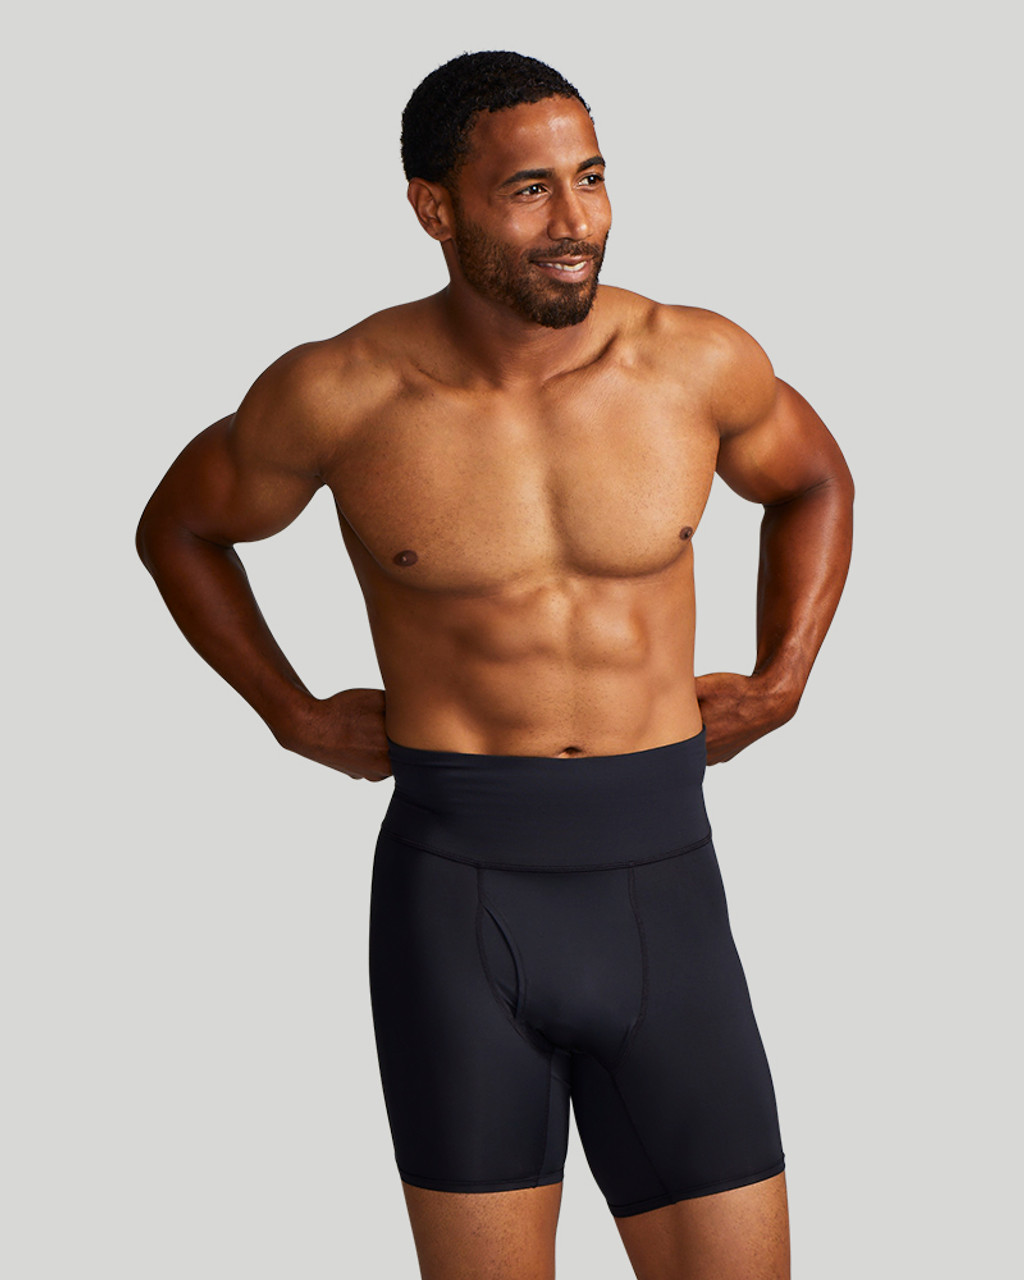 Men's Support Underwear | Shop Pain Relief at Tommie Copper®